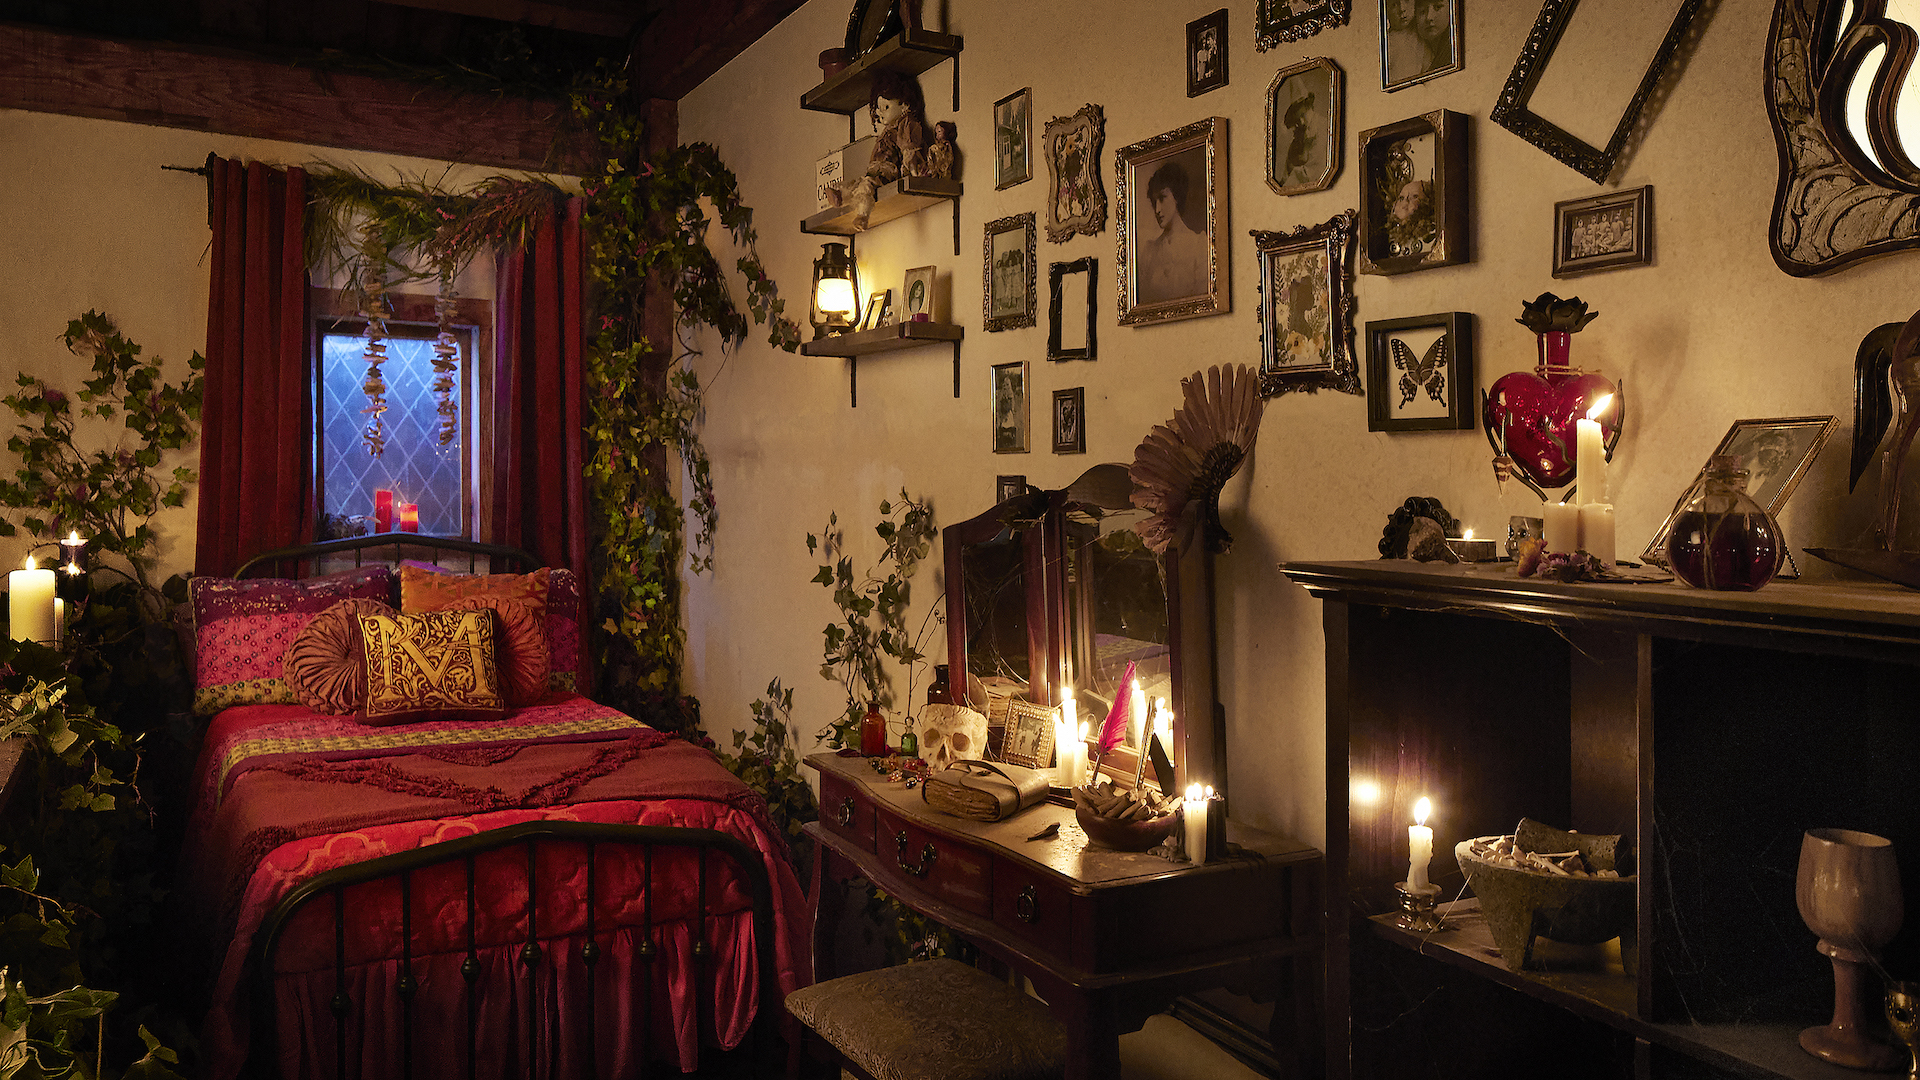 hocus pocus airbnb bedroom